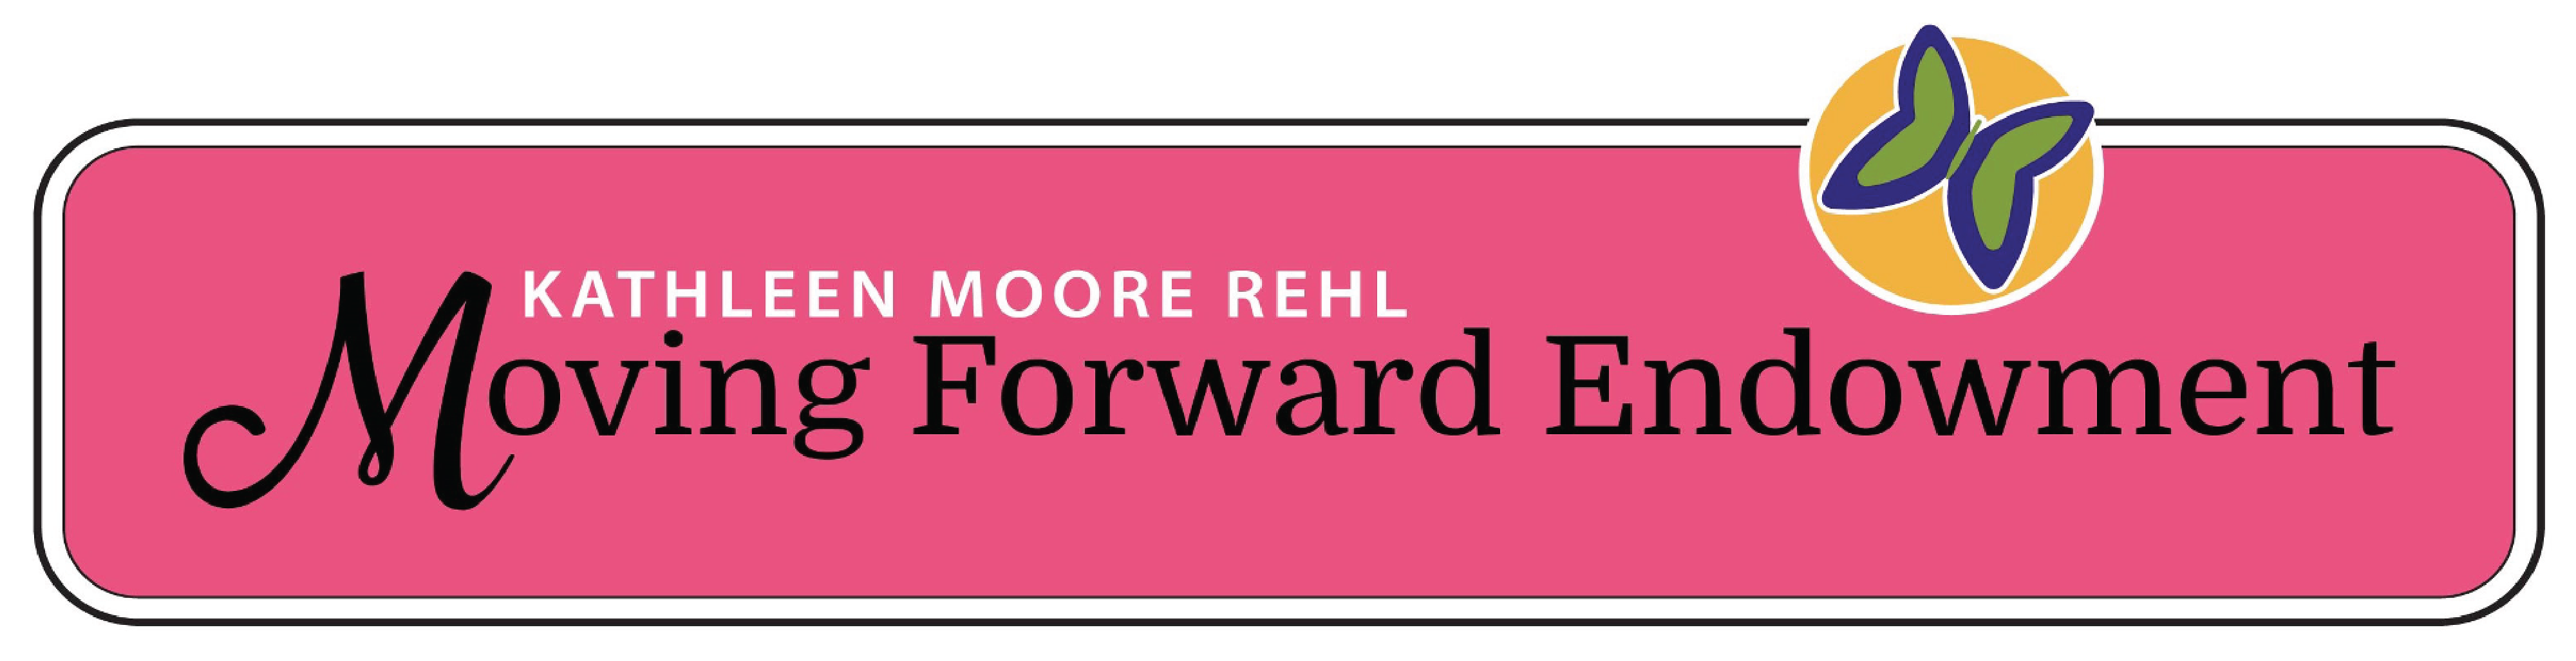 Kathleen Moore Rehl Moving Forward Endowment